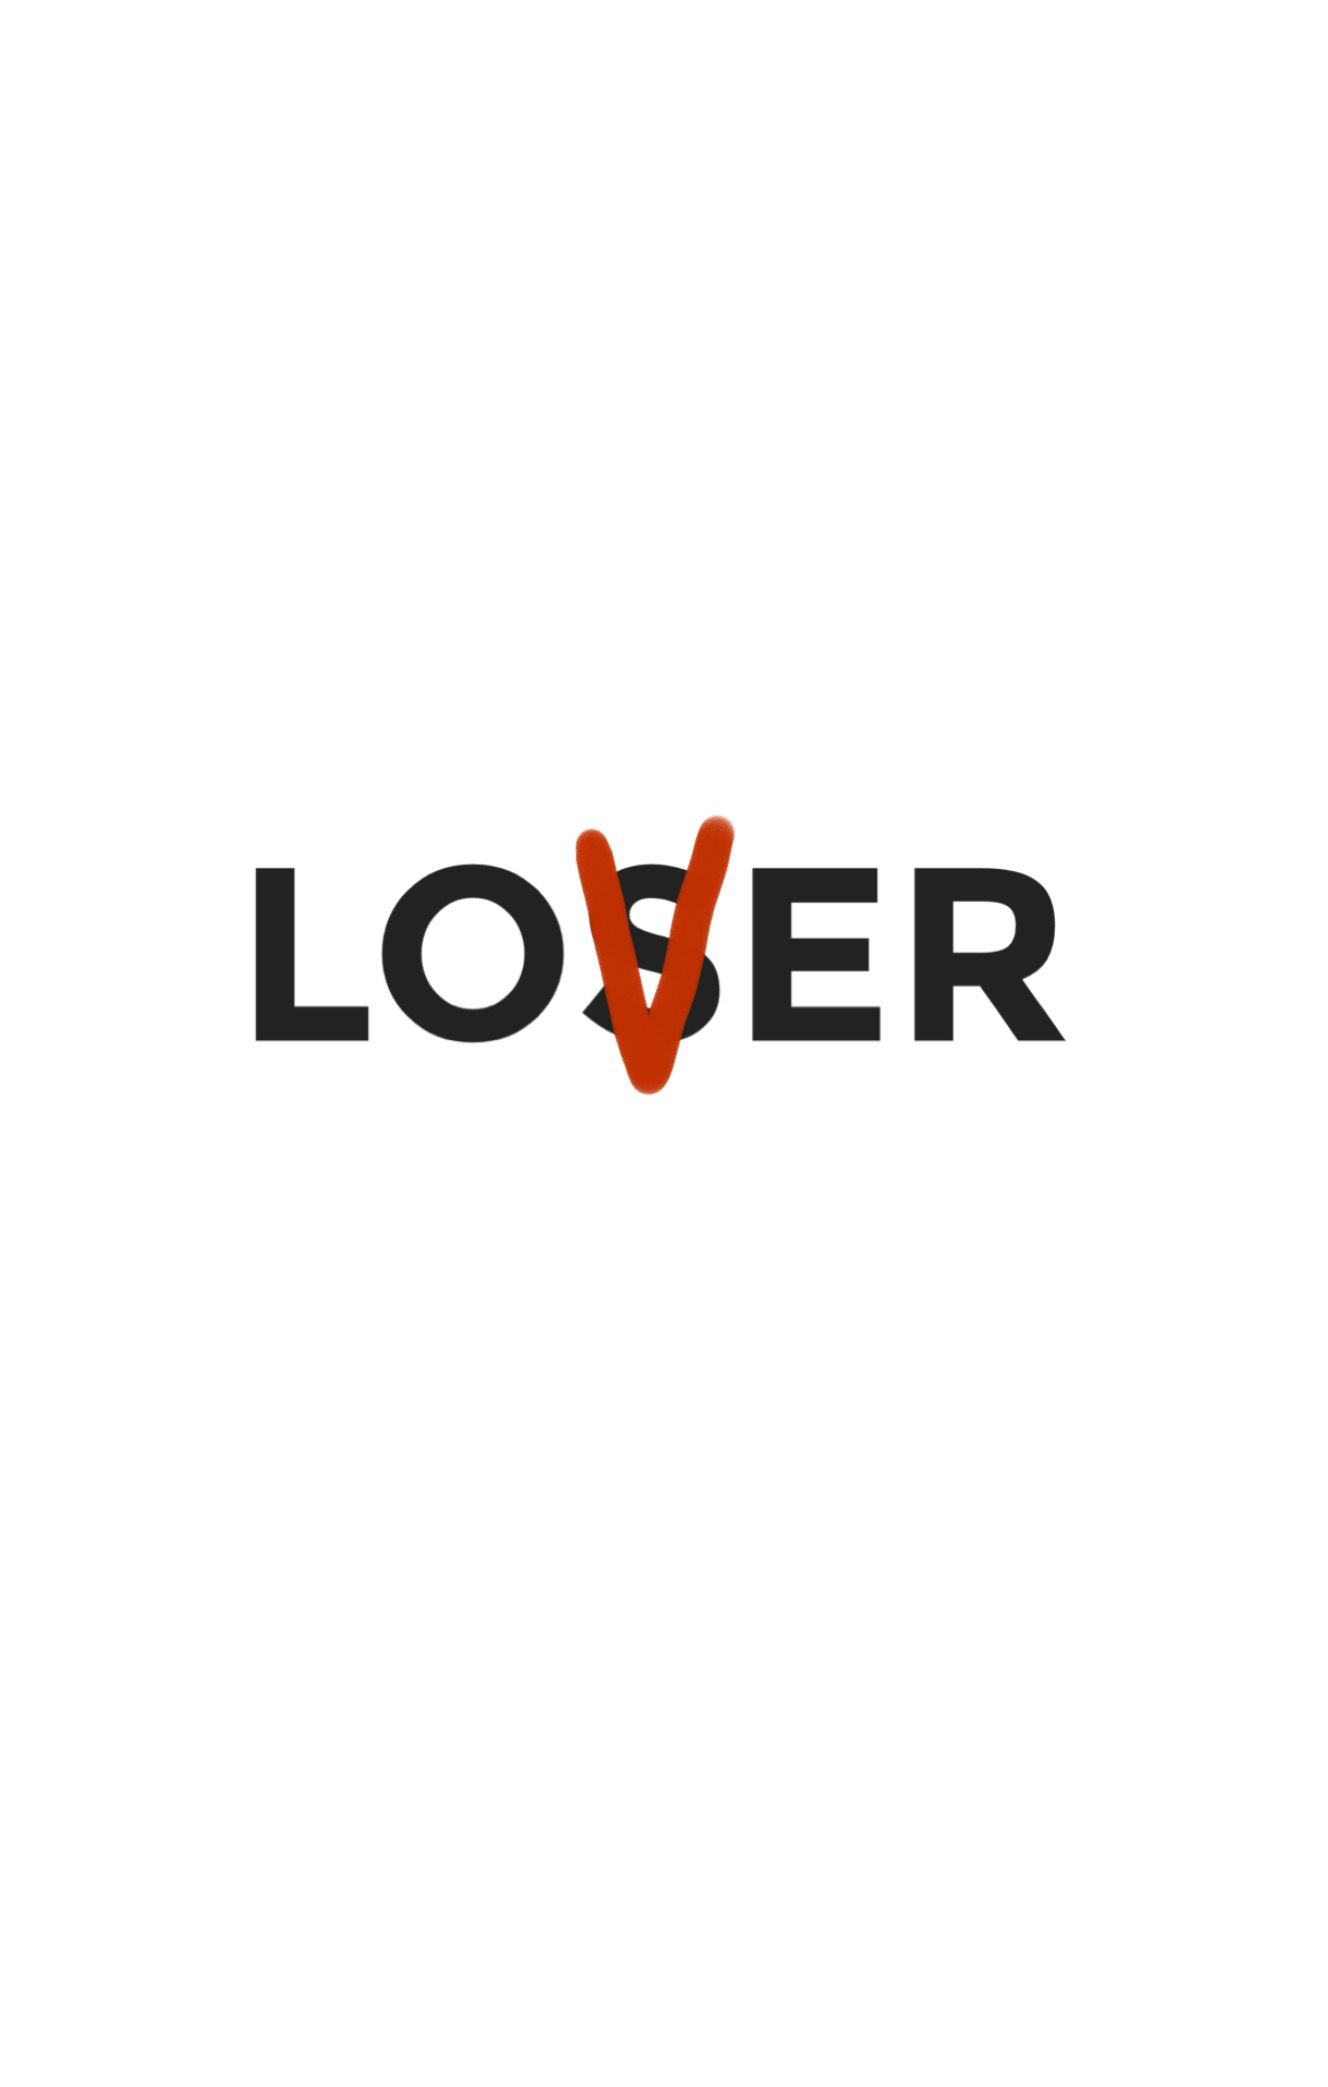 Losers club Tattoos for lovers Im a loser Club tattoo